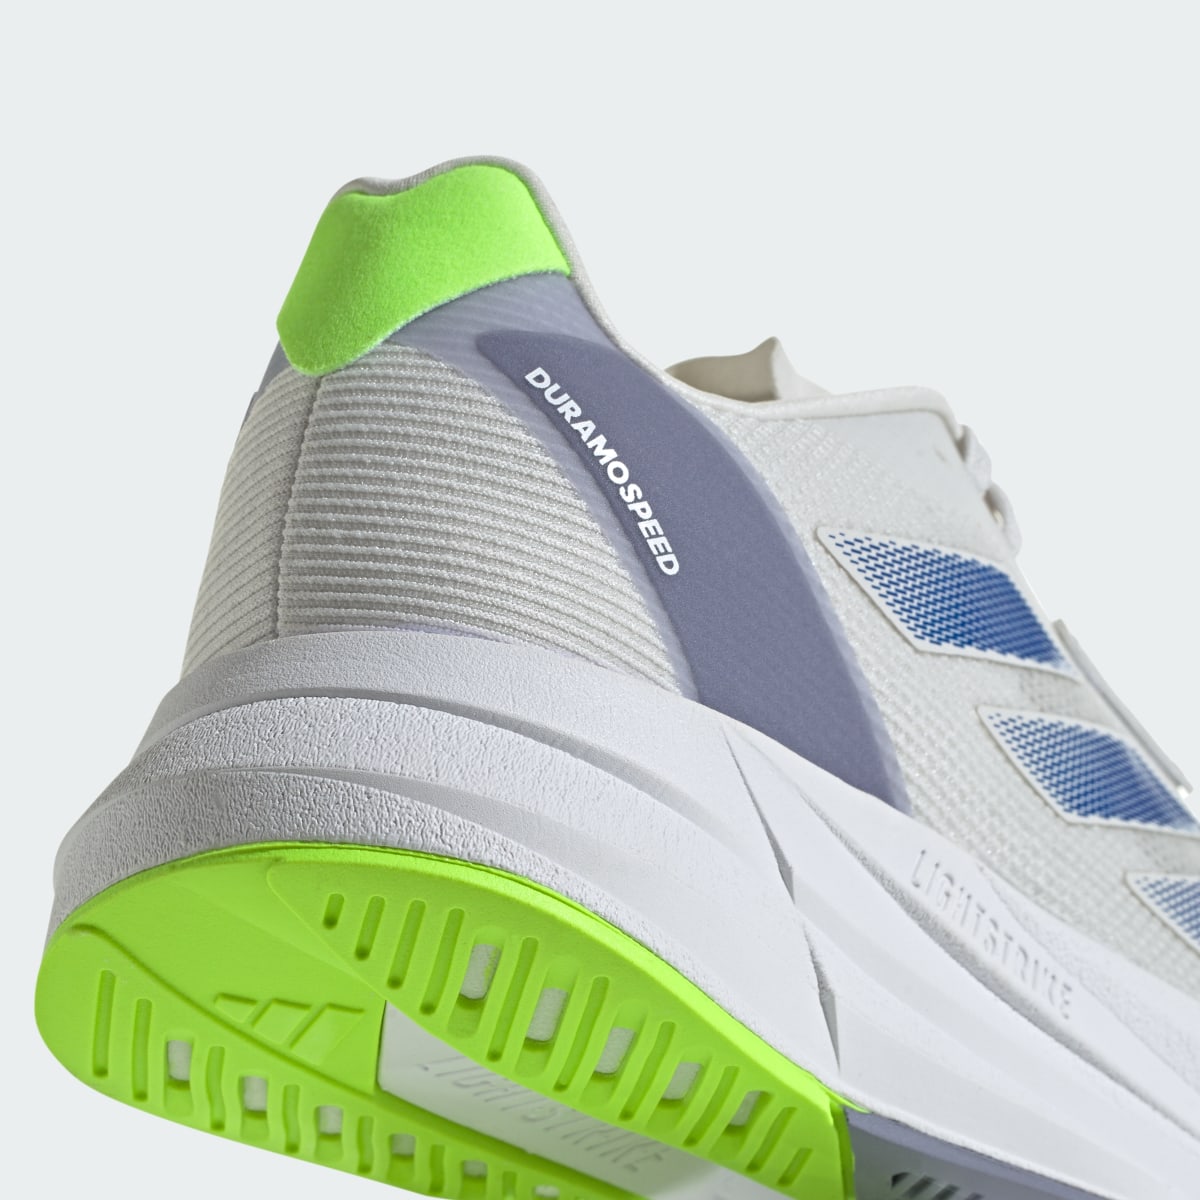 Adidas Duramo Speed Shoes. 10